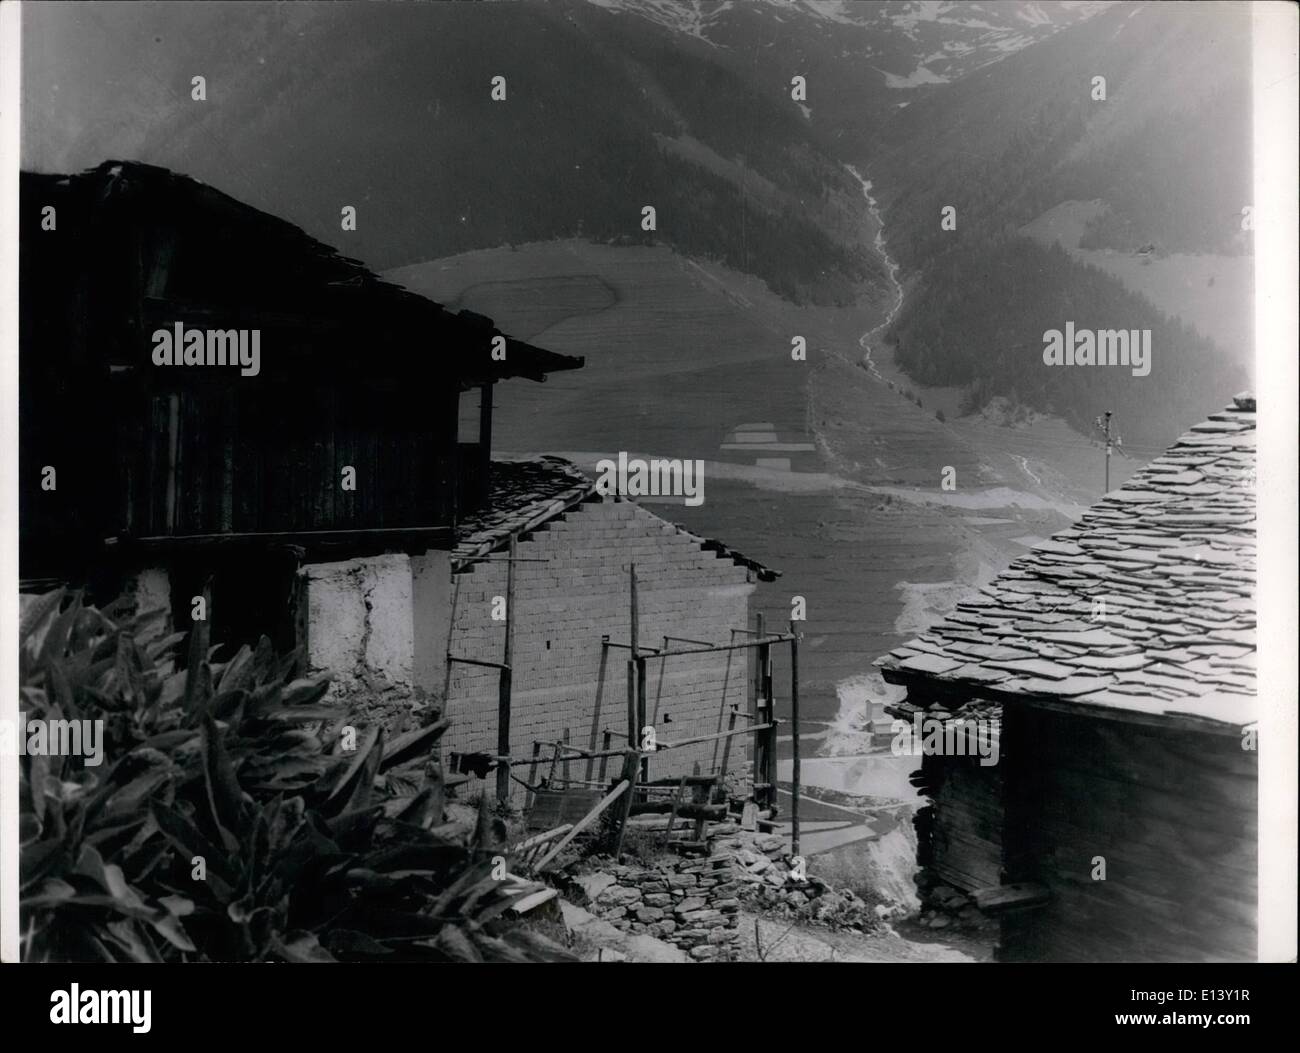 27 mar 2012 - Swiss città fantasma di vitale importanza Exquis Foto Stock